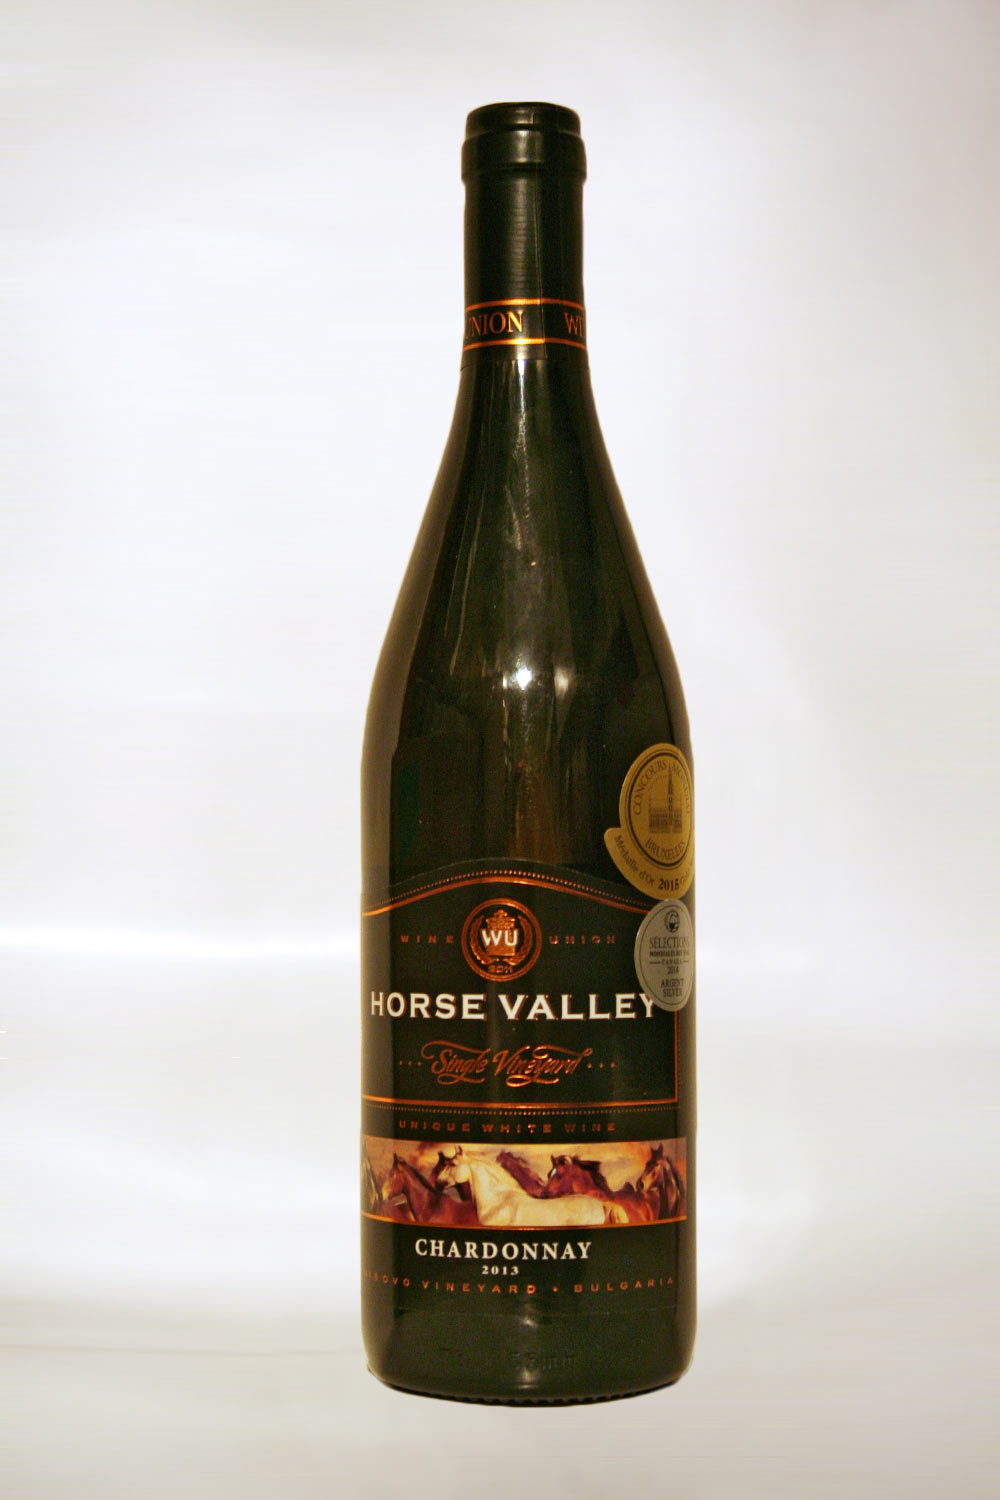 Horse Valley Chardonnay 2013